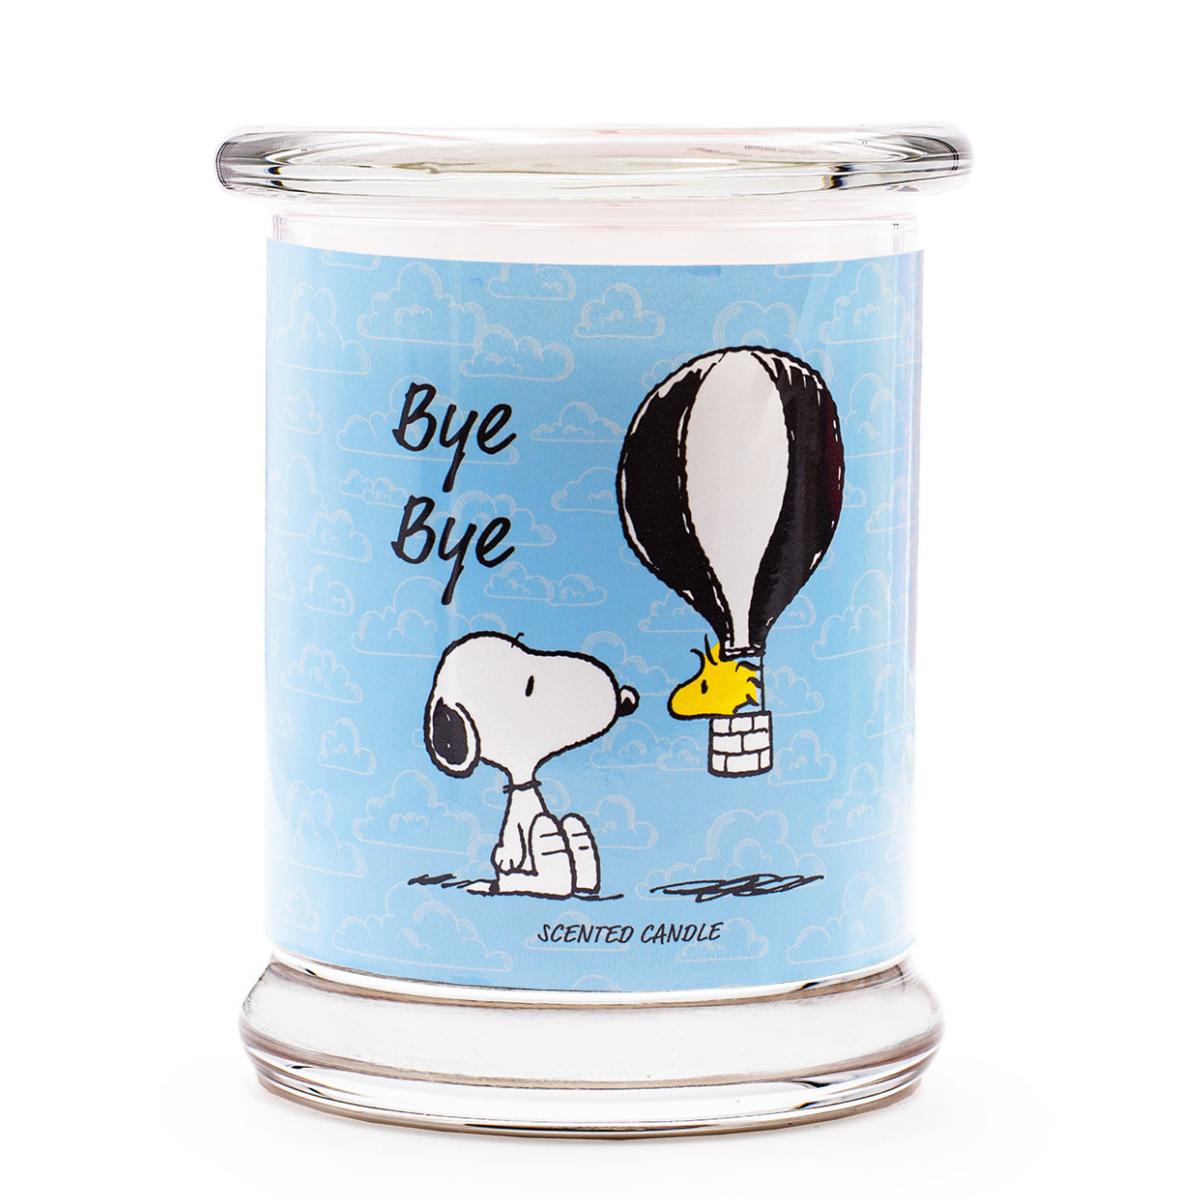 Bye Bye - Duftkerze 250g von Peanuts